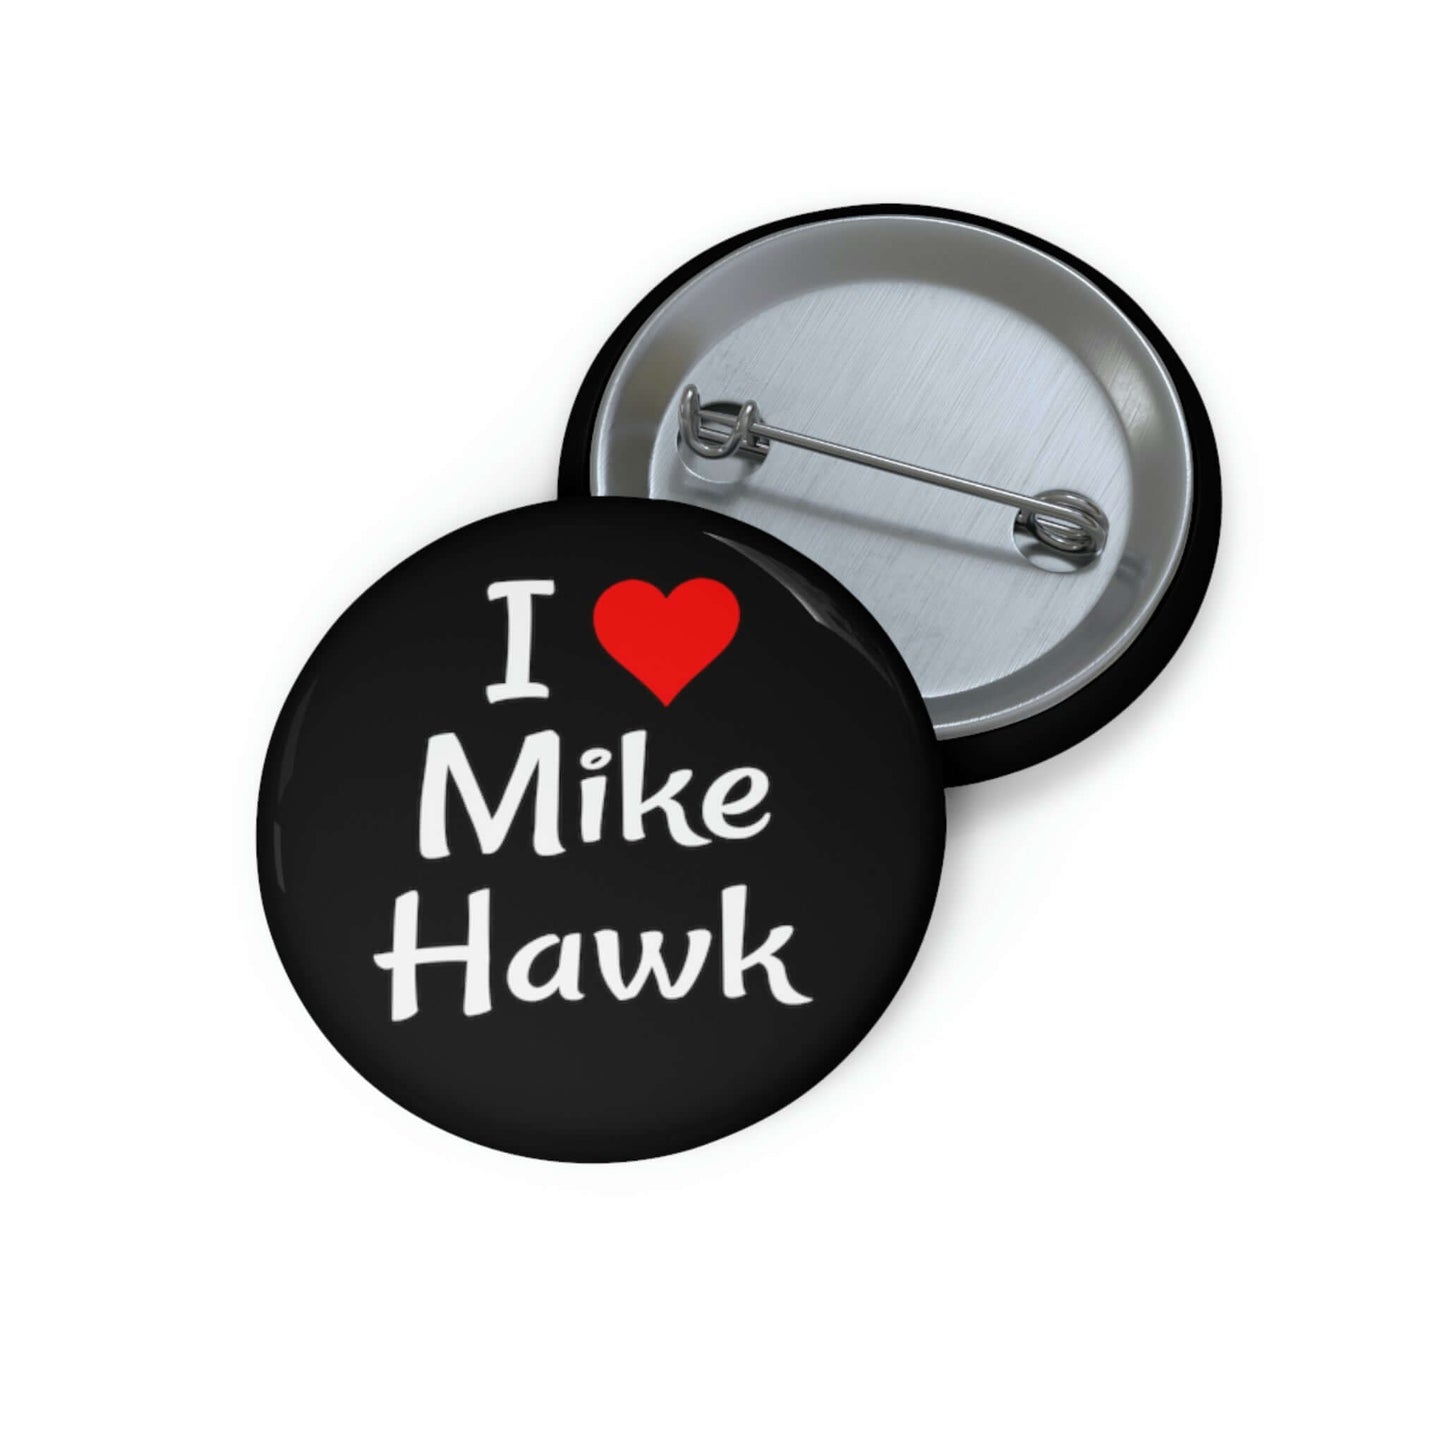 I love Mike Hawk pinback button